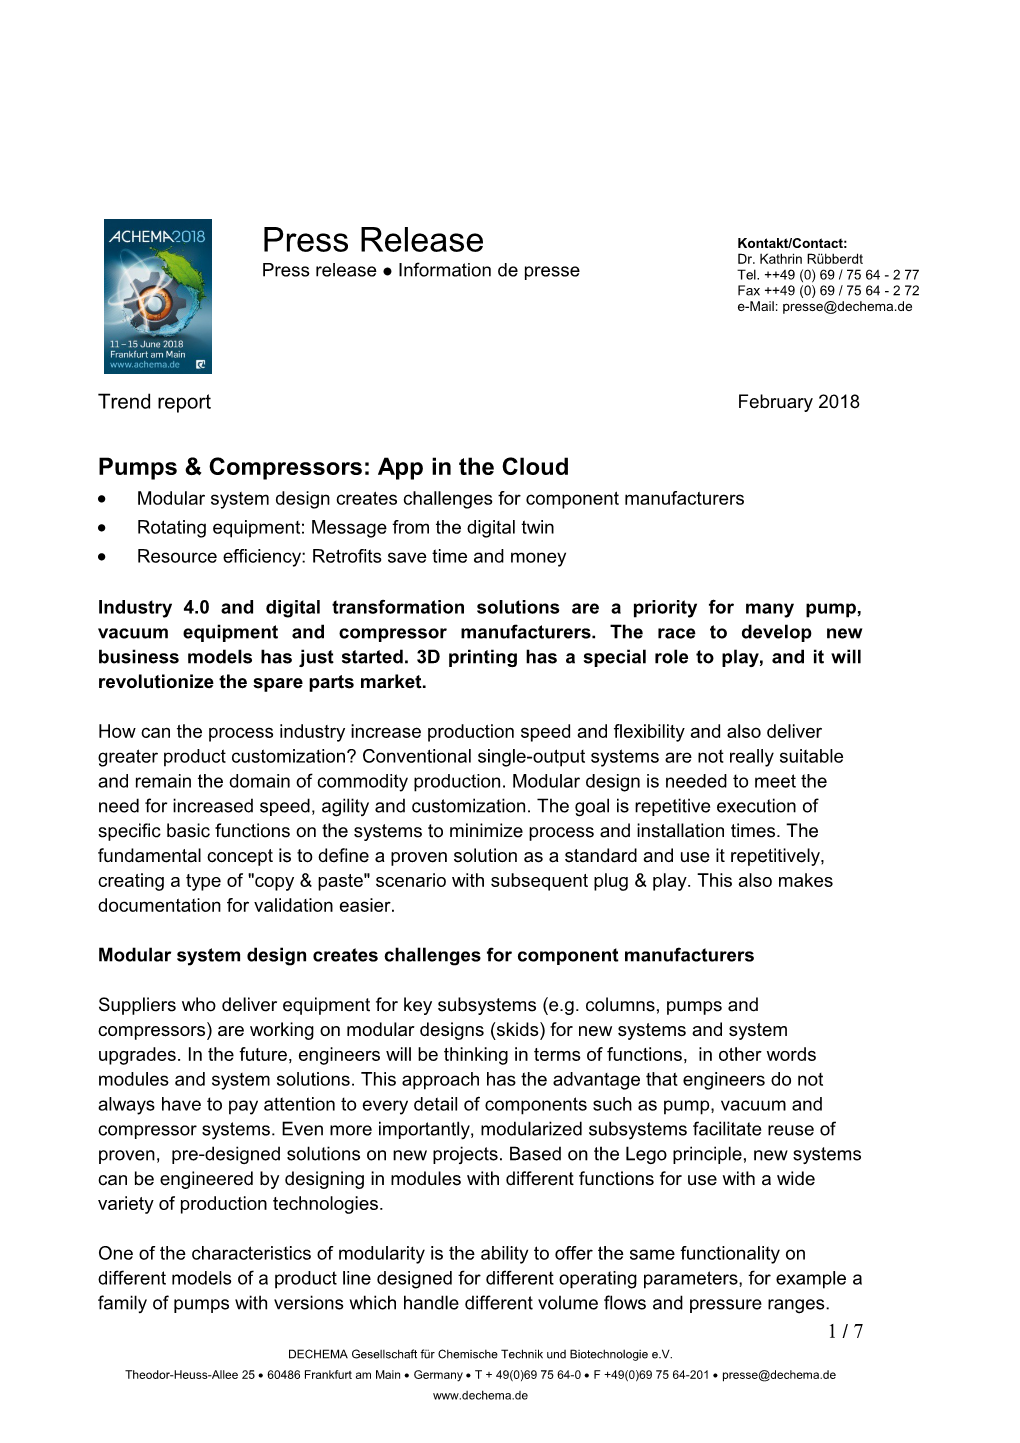 Pumps & Compressors: App in the Cloud